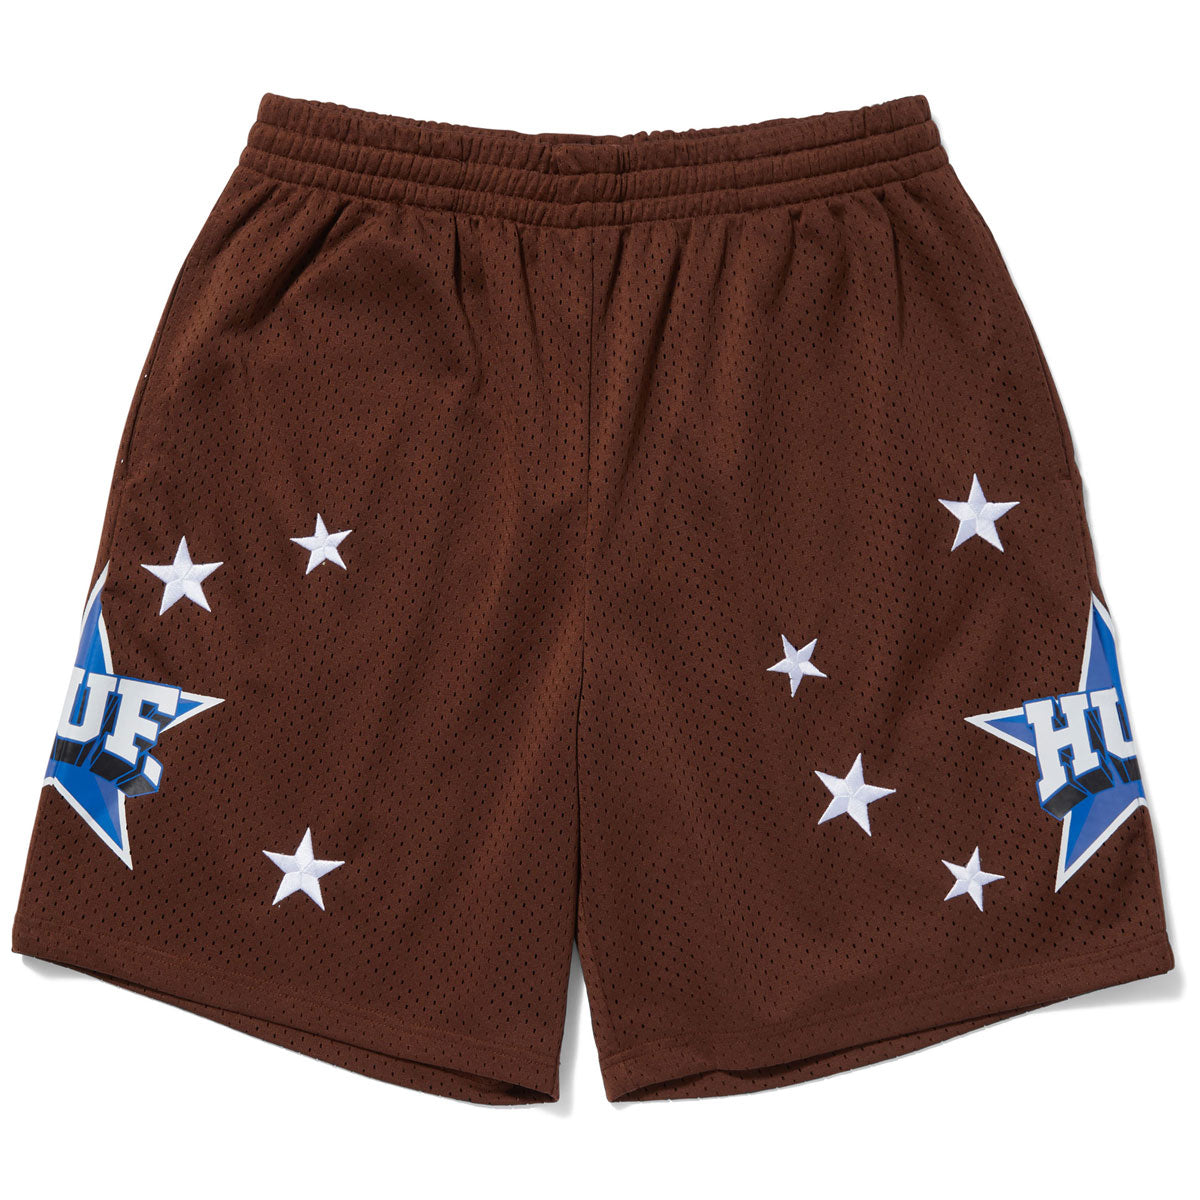 HUF All Star Basketball Shorts - Brown image 1